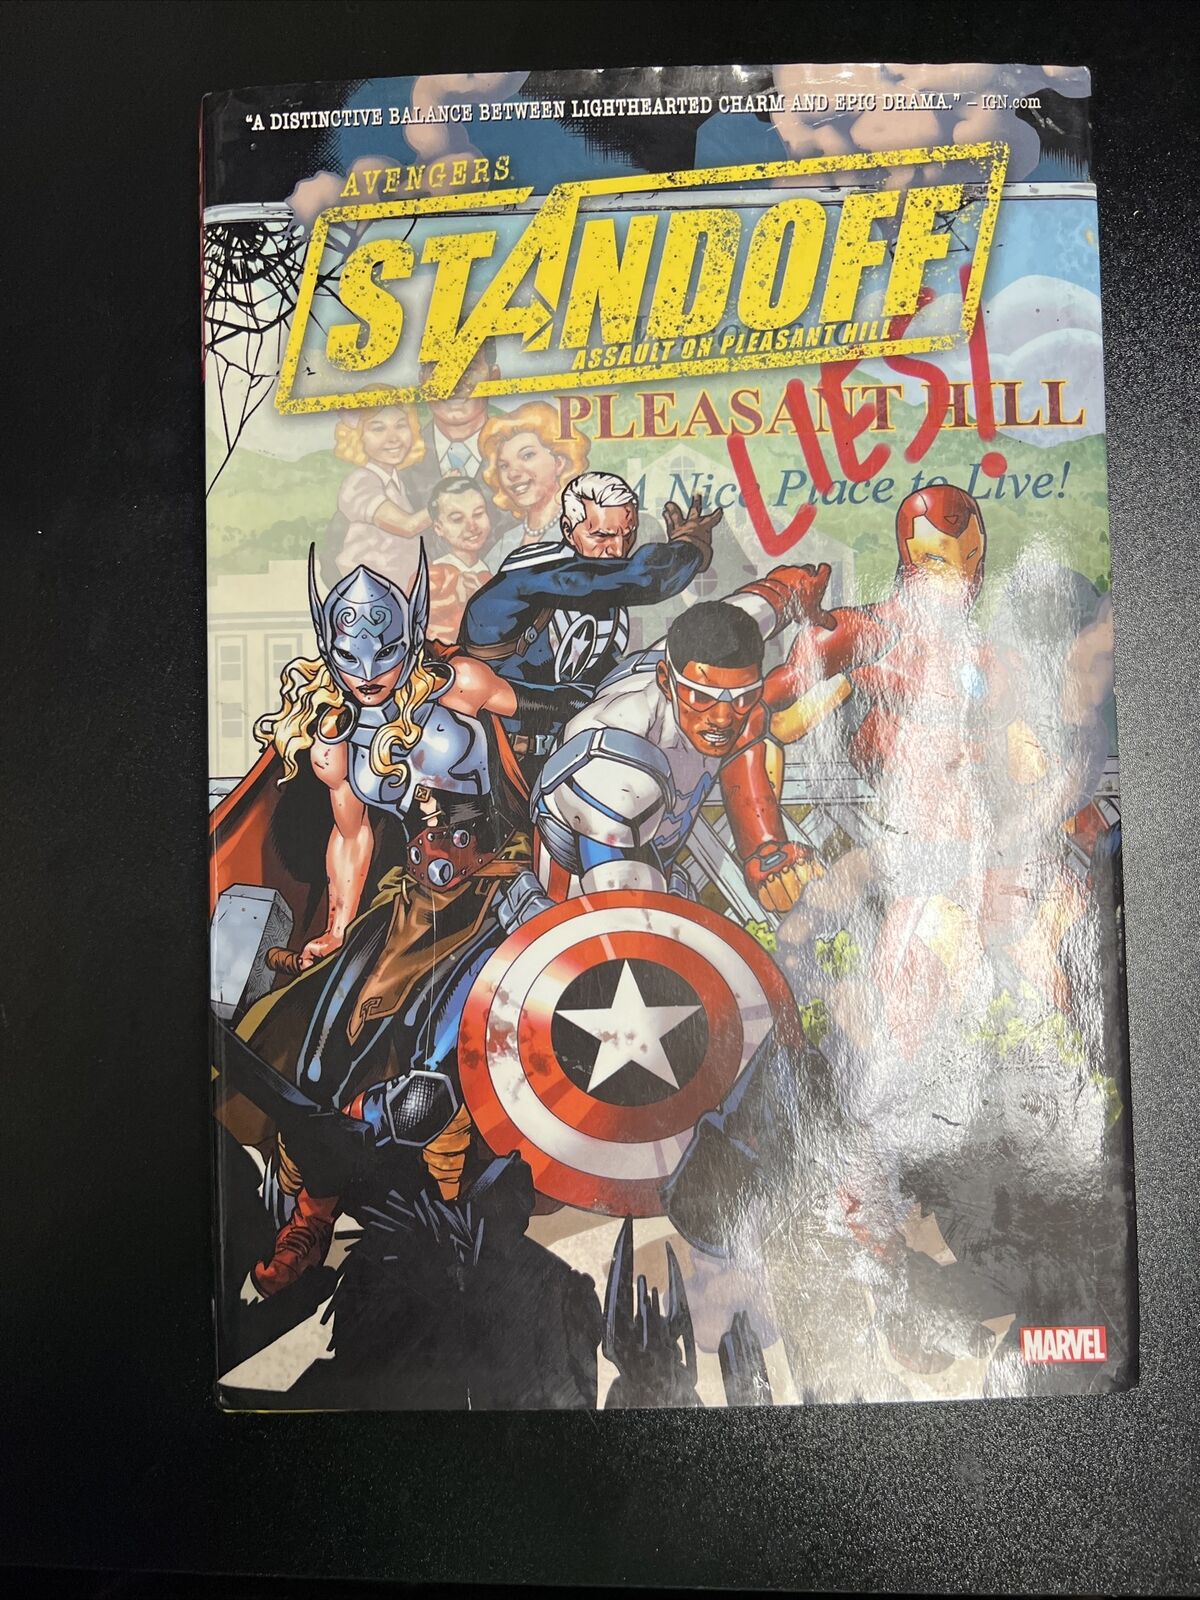 The Avengers: Standoff (Marvel Comics 2016)